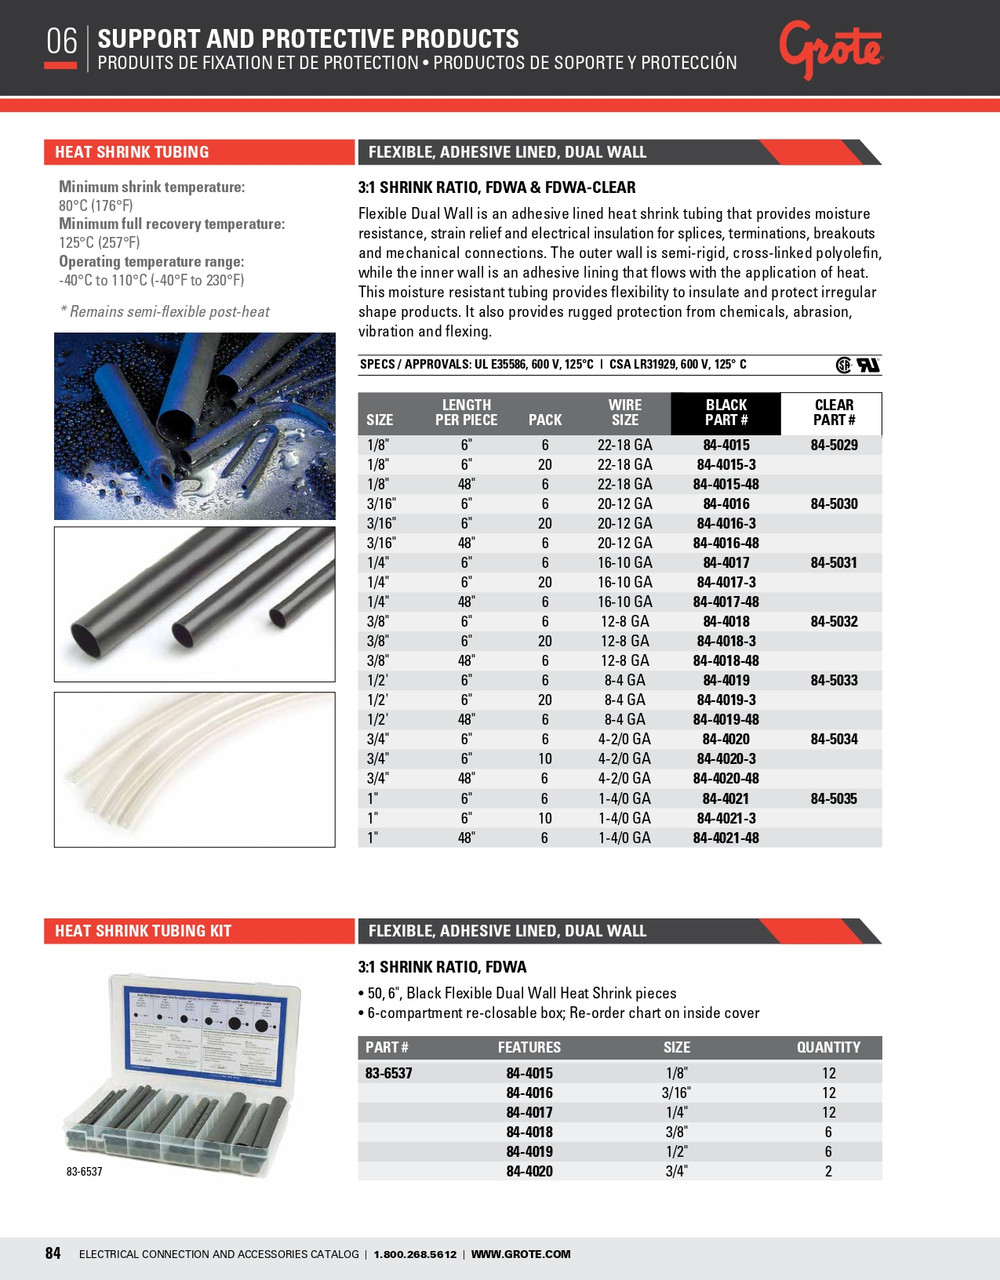 1" Dual Wall 3:1 Flexible Adhesive Lined Heat Shrink Tubing 6" @ 6 Pack - Black  84-4021